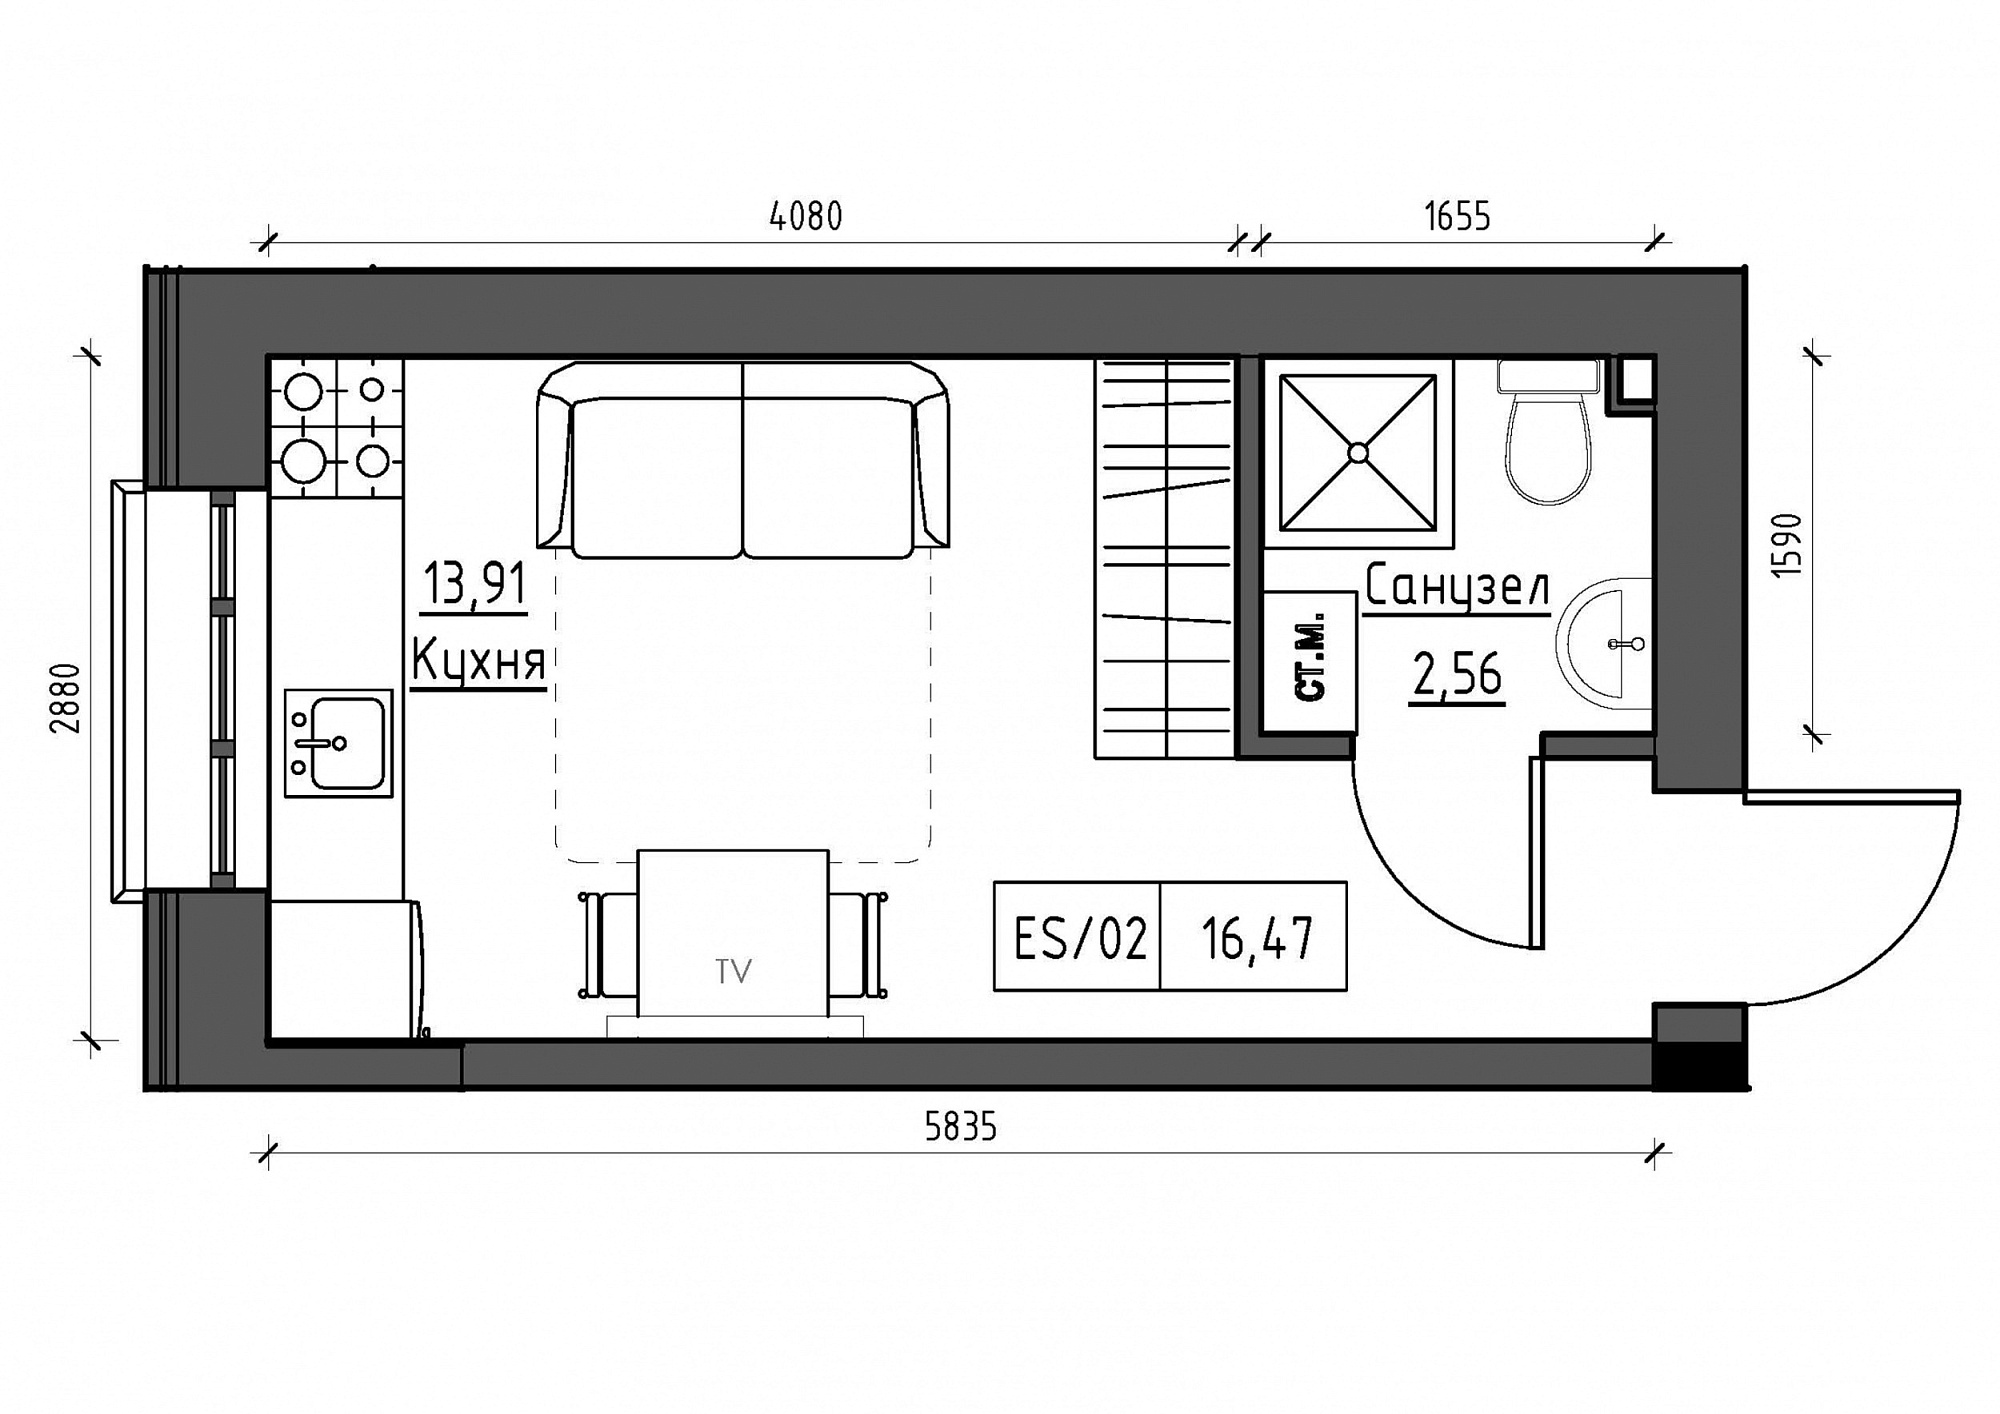 Planning Smart flats area 16.47m2, KS-012-02/0011.